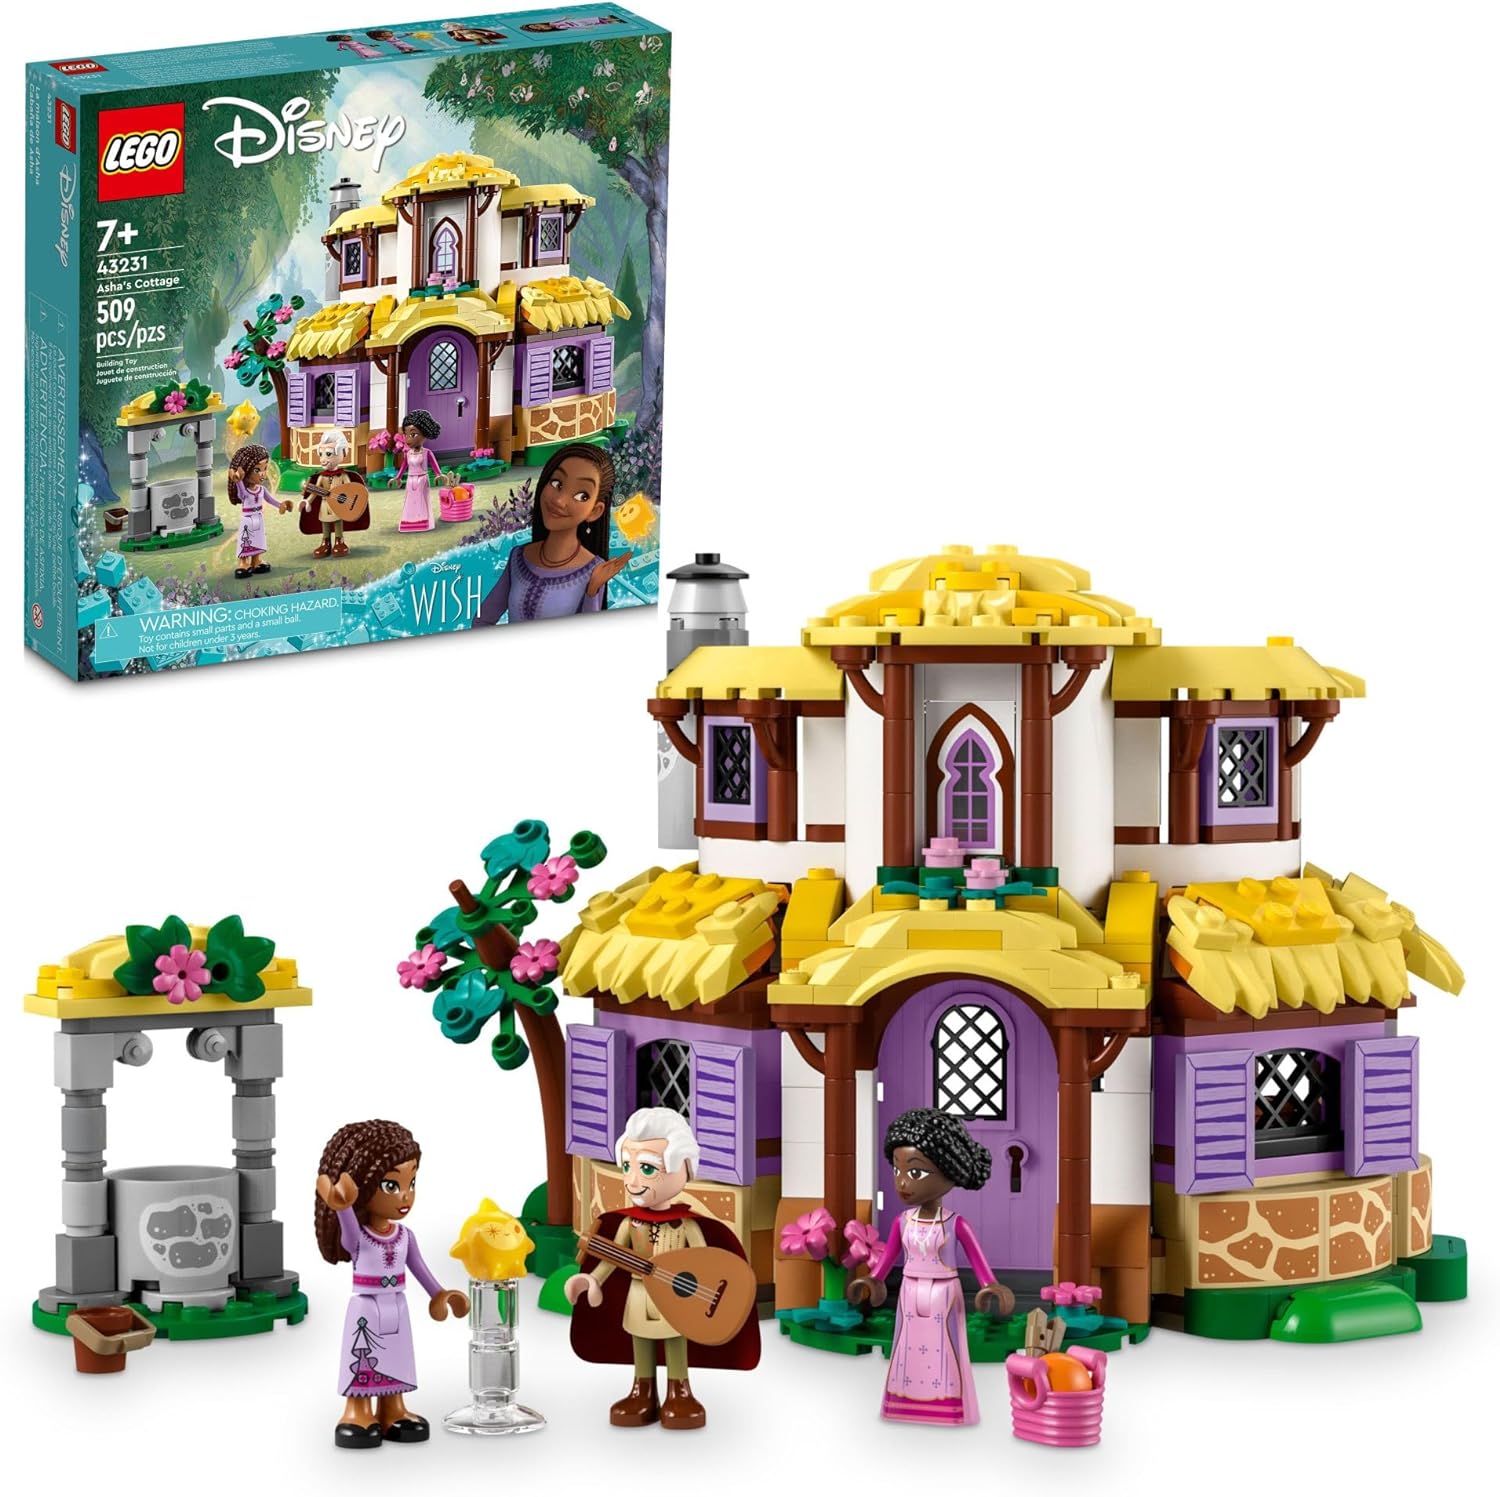 $21.60: 509-Piece LEGO Disney Princess Asha's Cottage Building Set (43231)